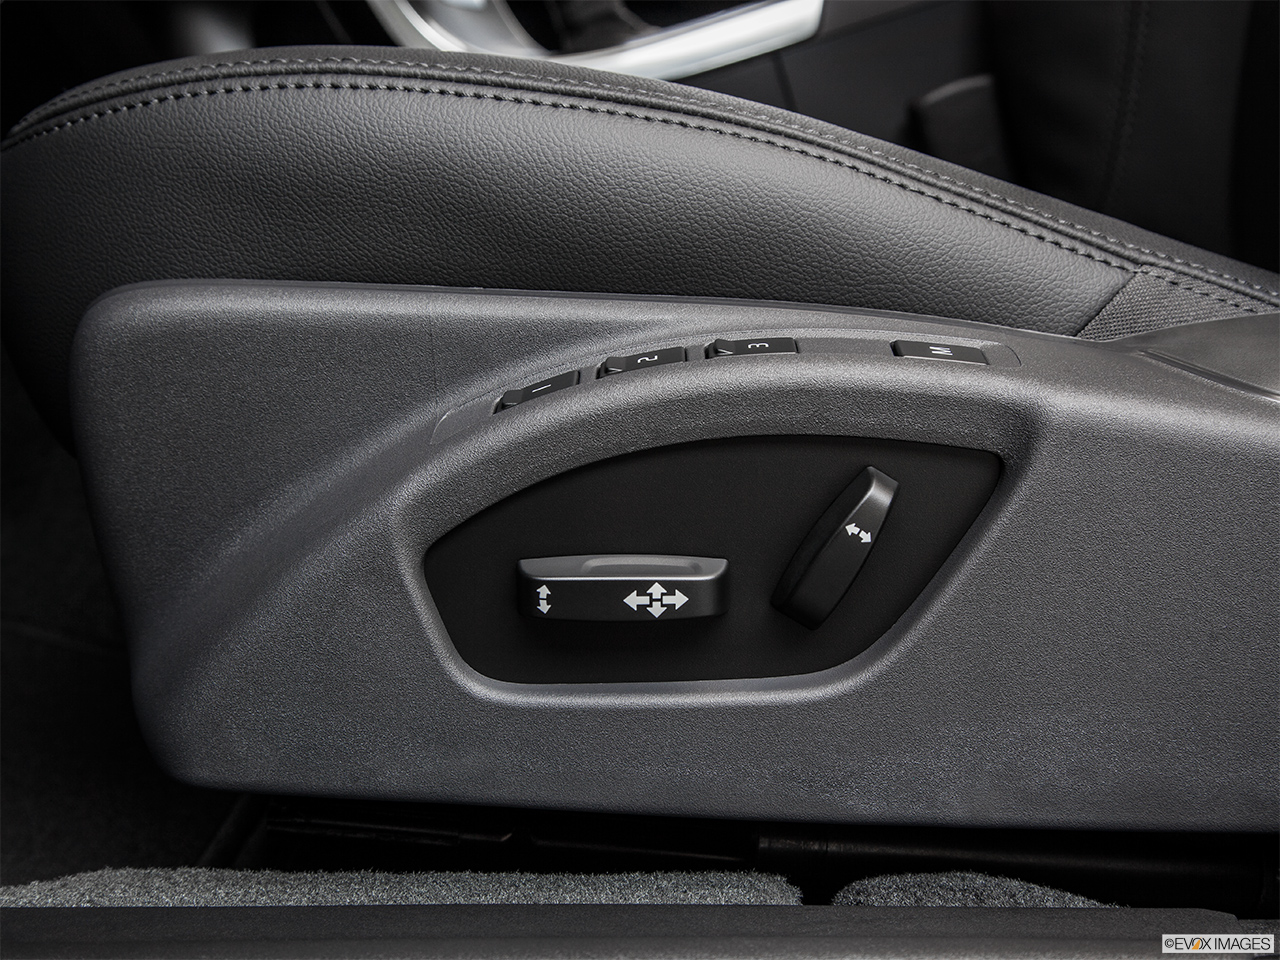 2015 Volvo S60 Premier Seat Adjustment Controllers. 